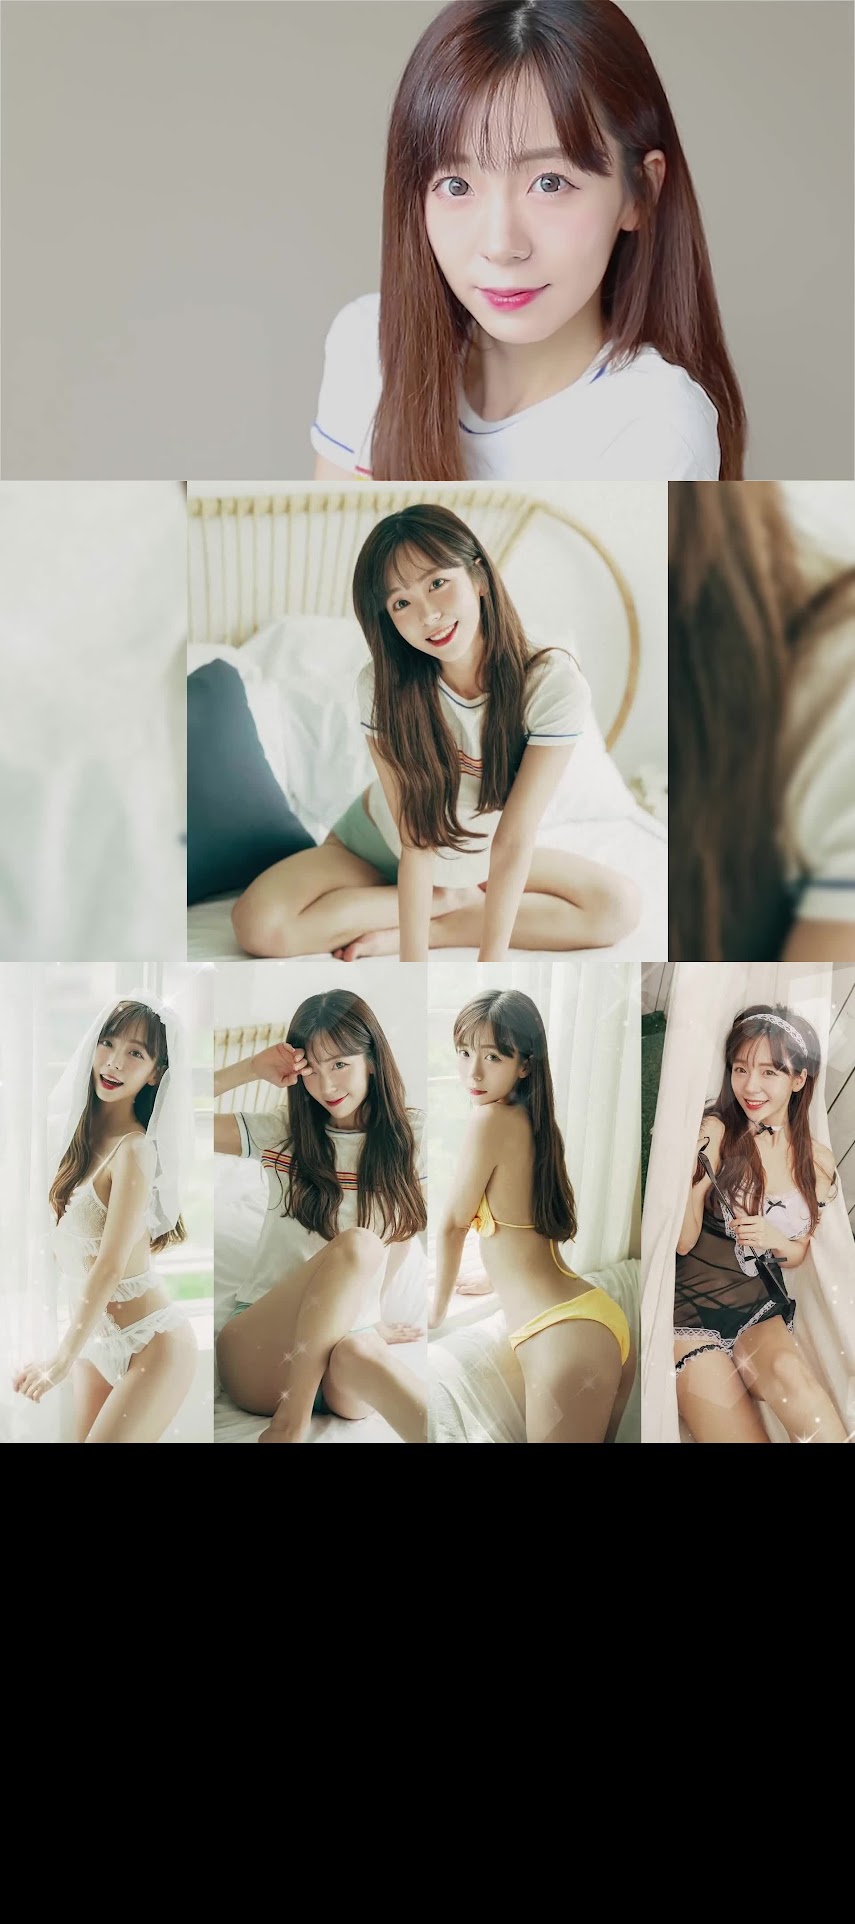 Korean model 3 sexy girls image jav